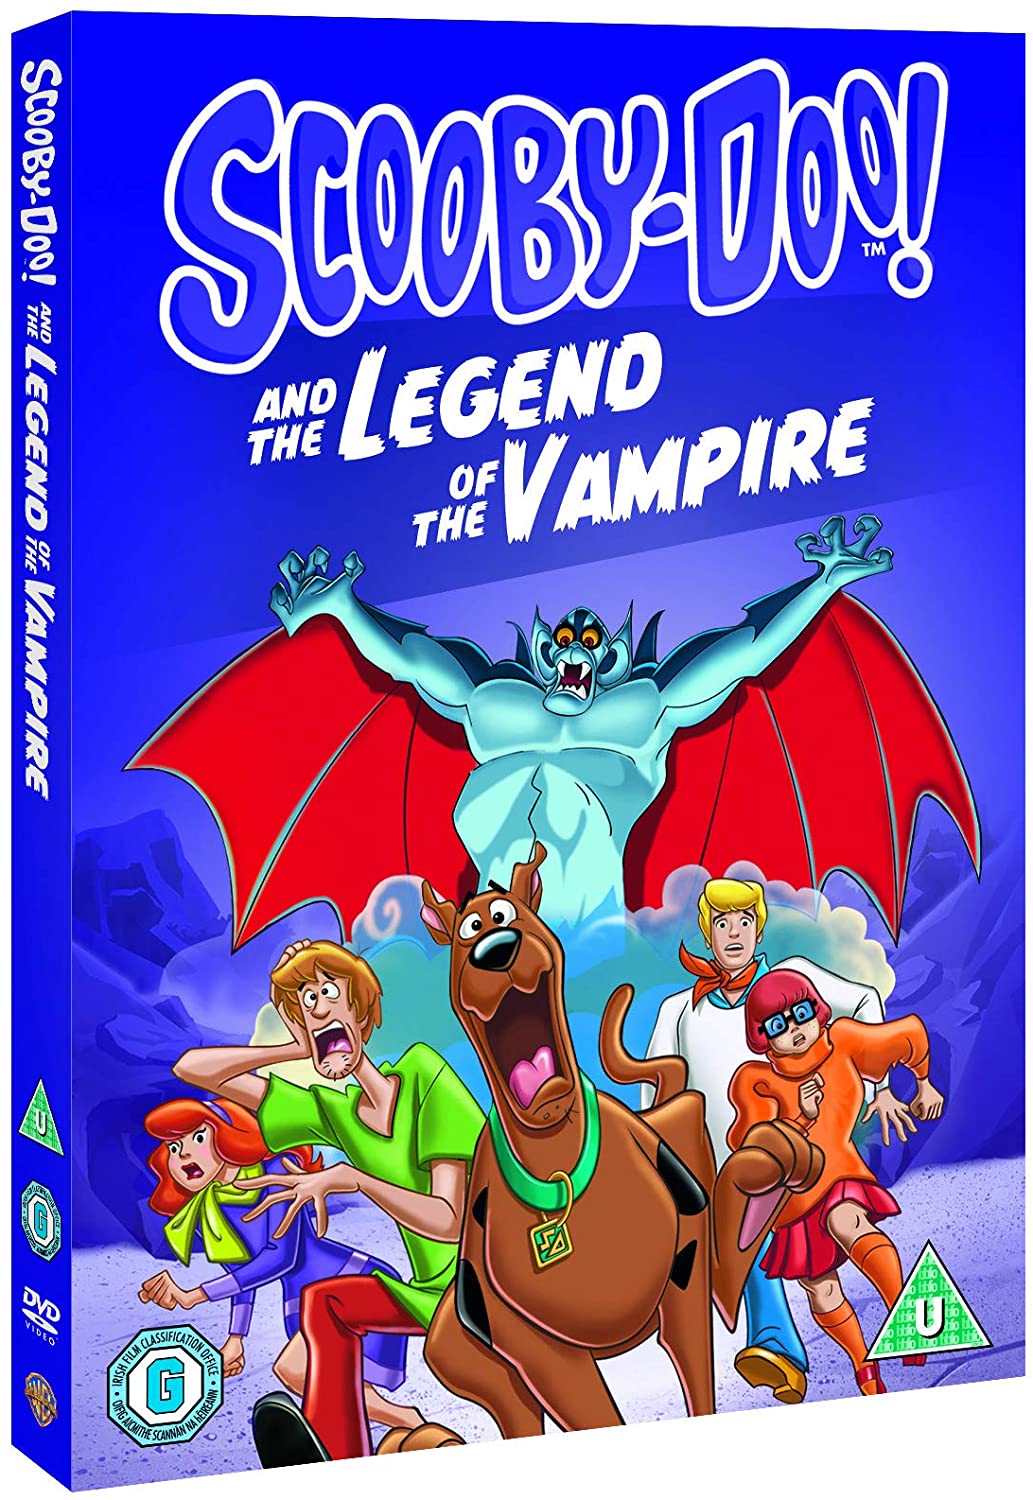 Scooby-Doo: Die Legende vom Vampir [2003]